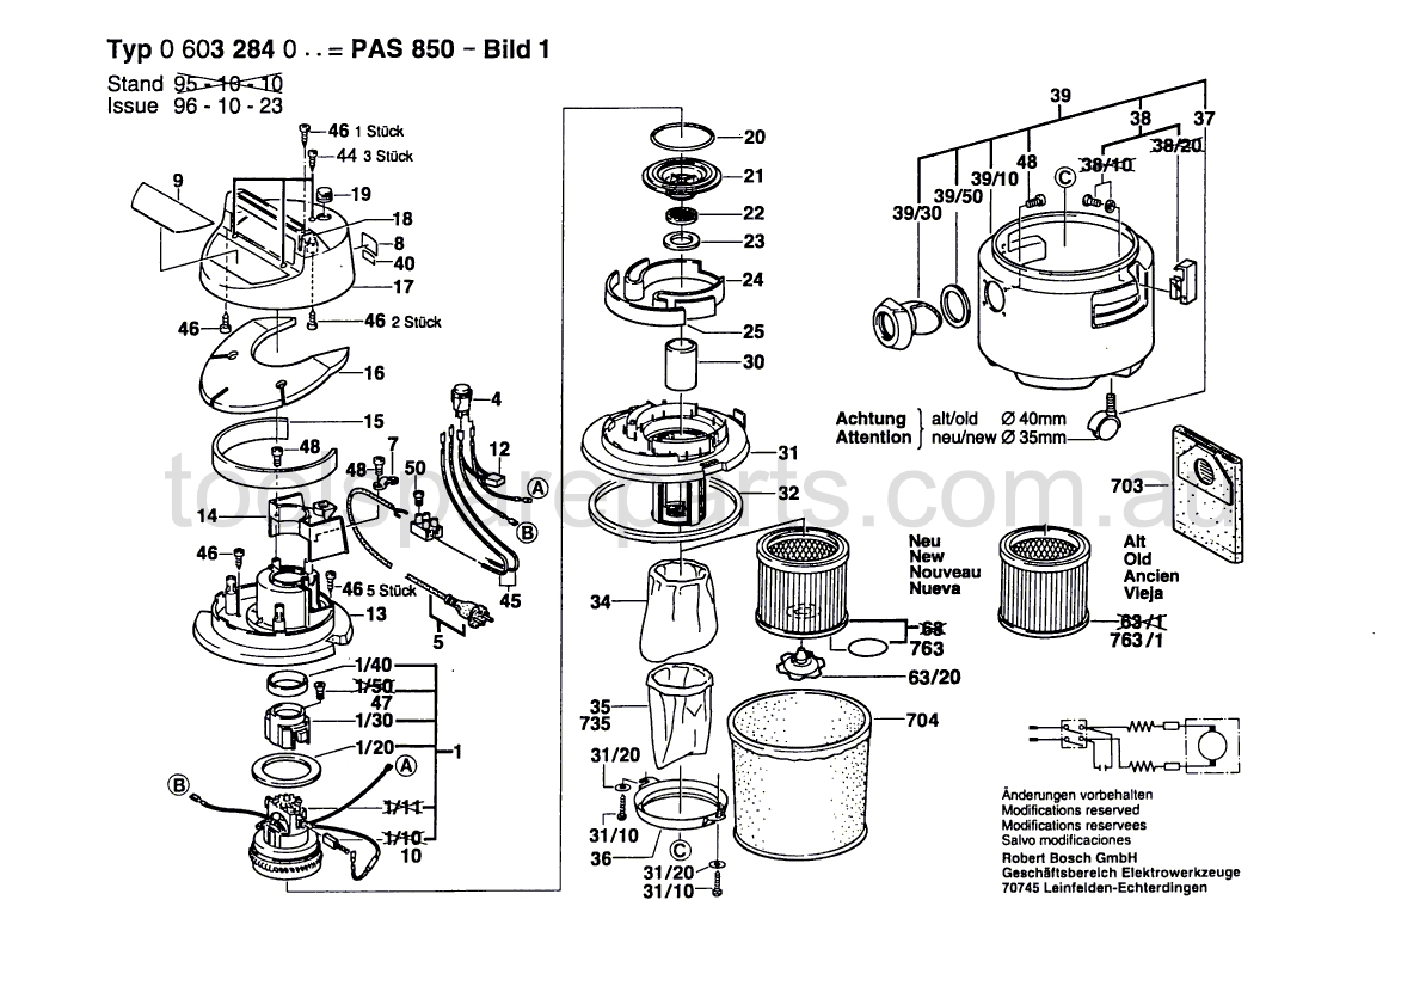 Bosch PAS 850 0603284037  Diagram 1